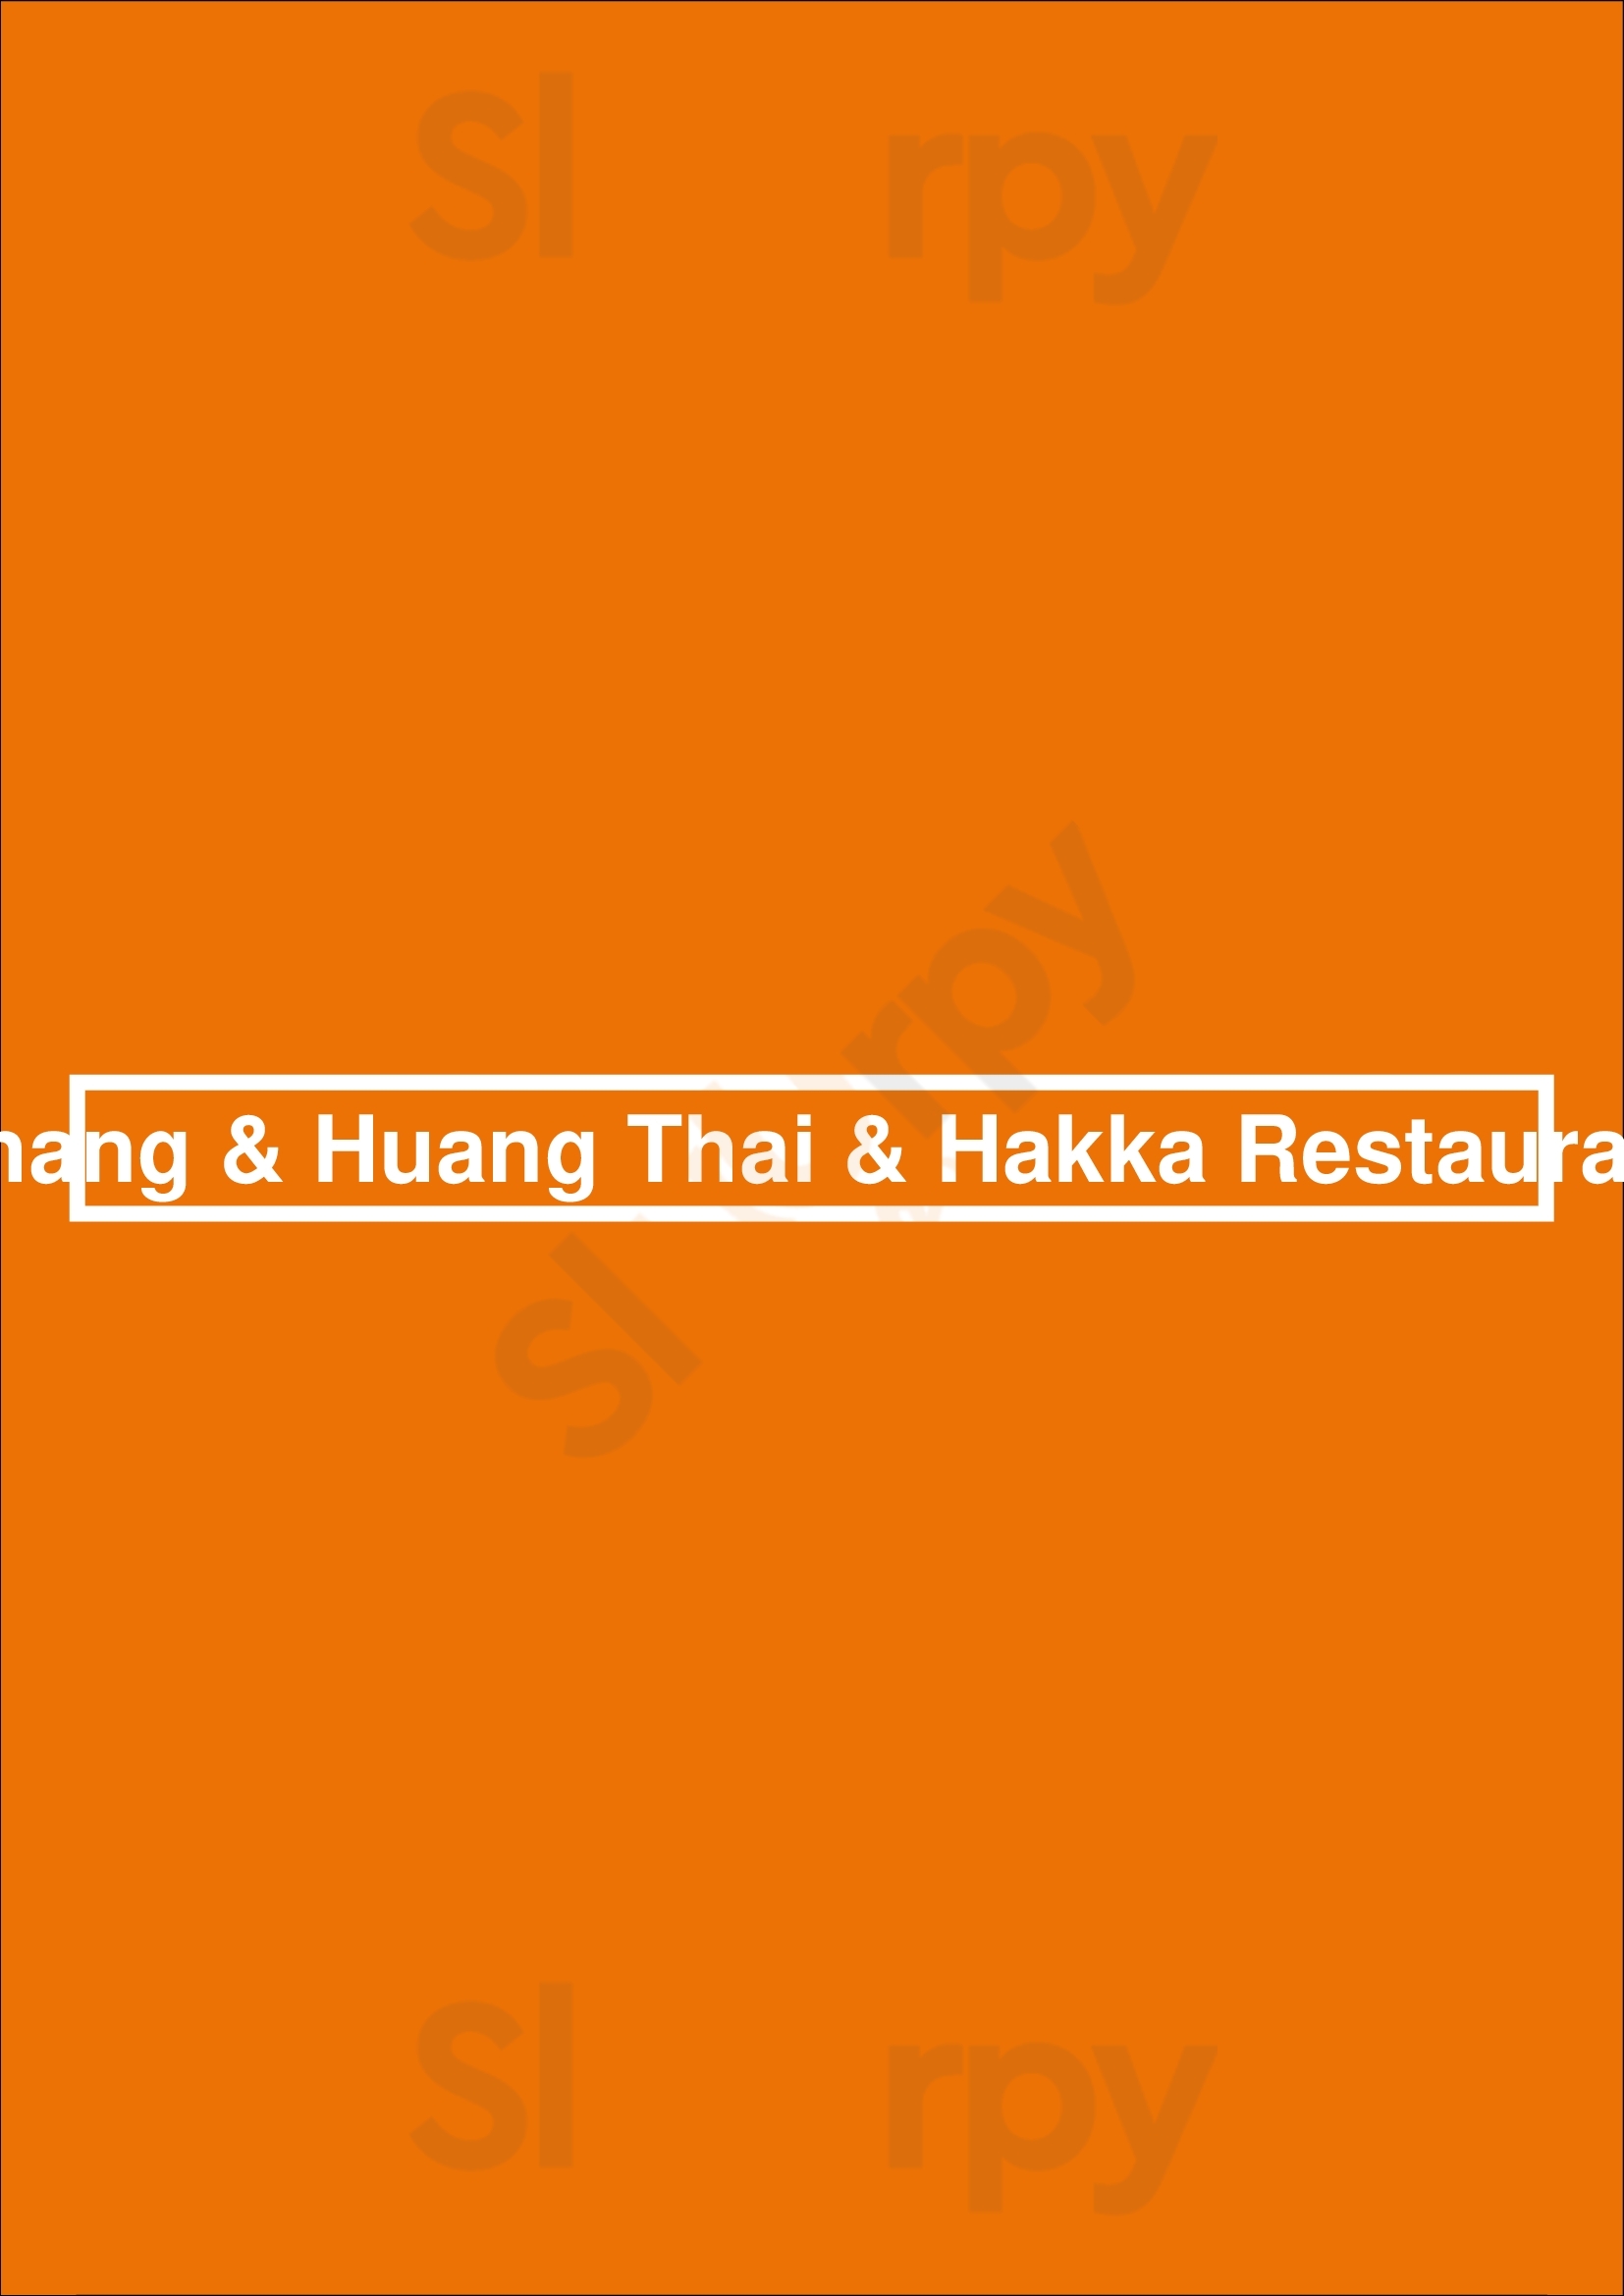 Chang & Huang Thai Restaurant Mississauga Menu - 1